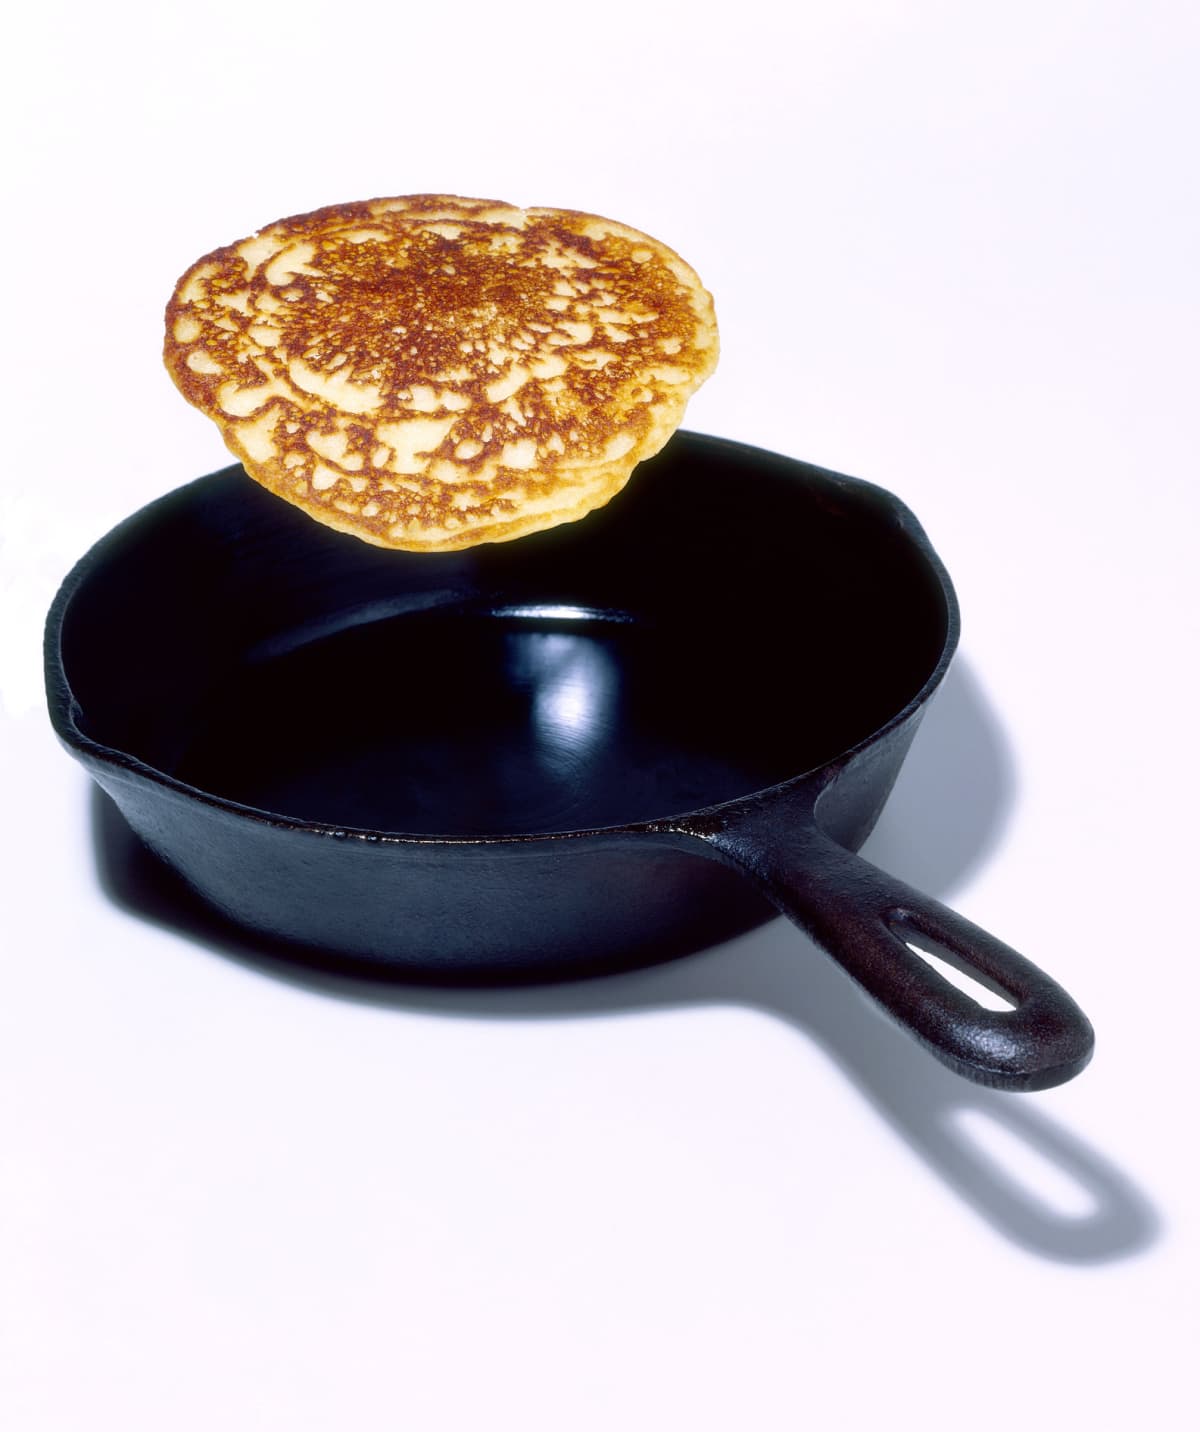 Pancake being flipped above pan on white background